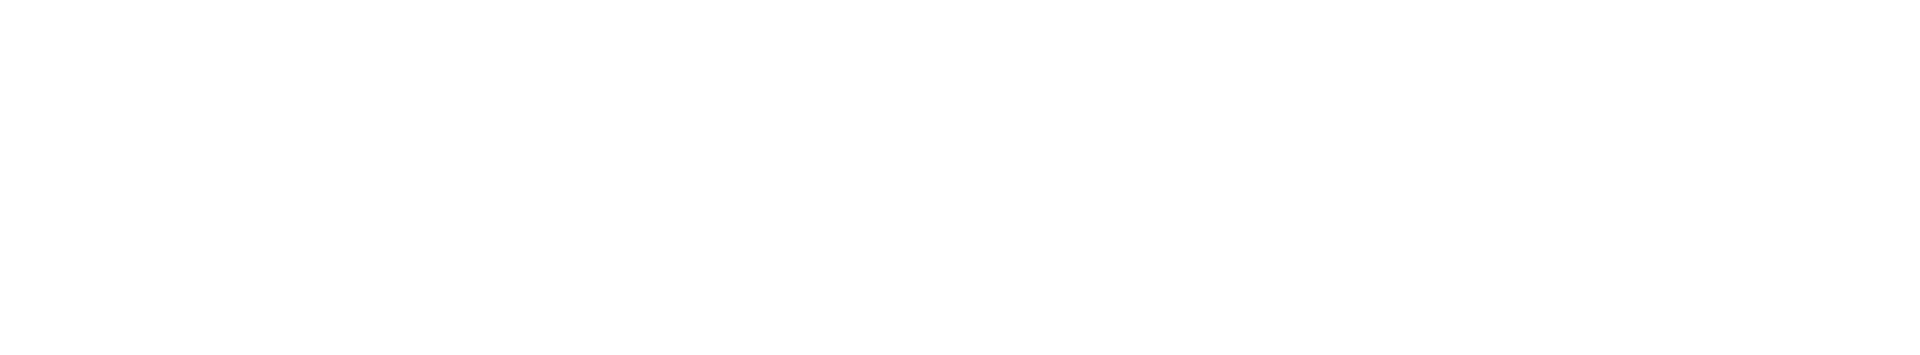 Magicweb sort logo uden baggrund png